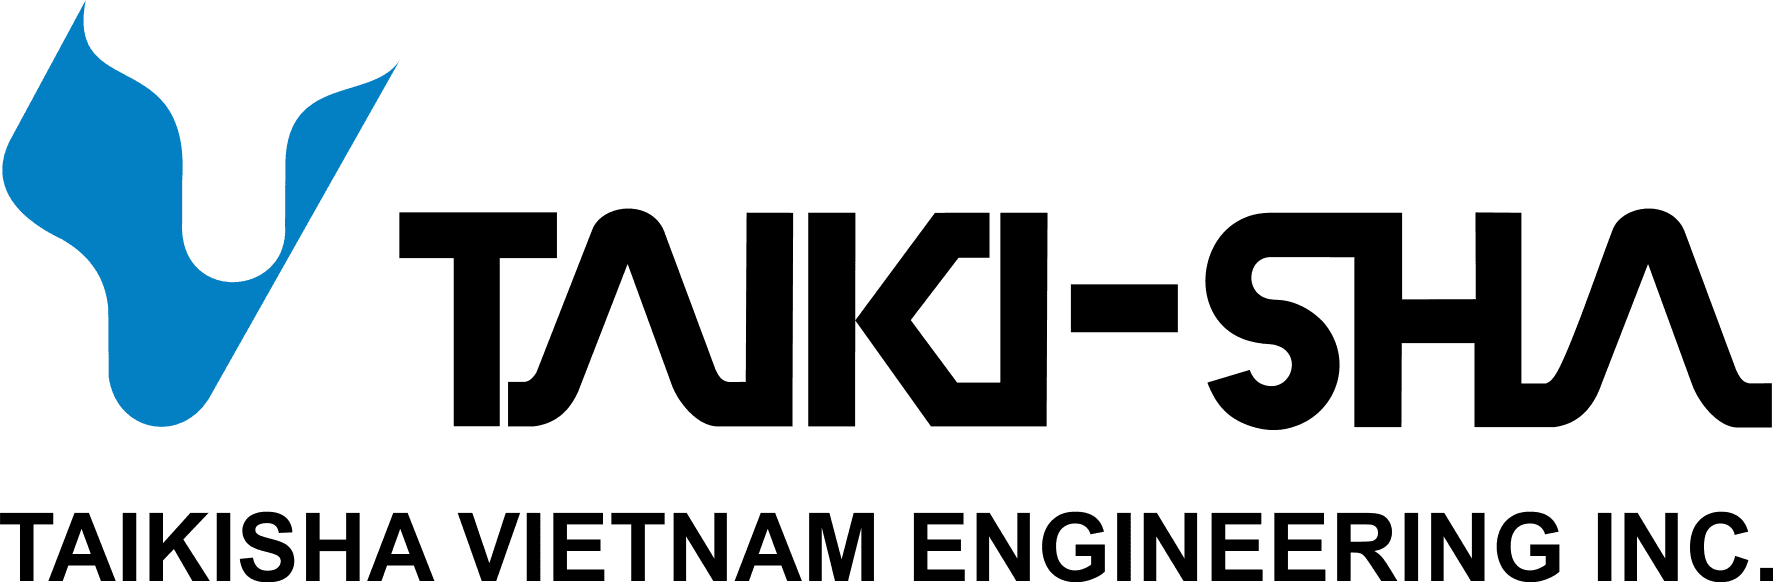 Latest Taikisha Vietnam Engineering employment/hiring with high salary & attractive benefits